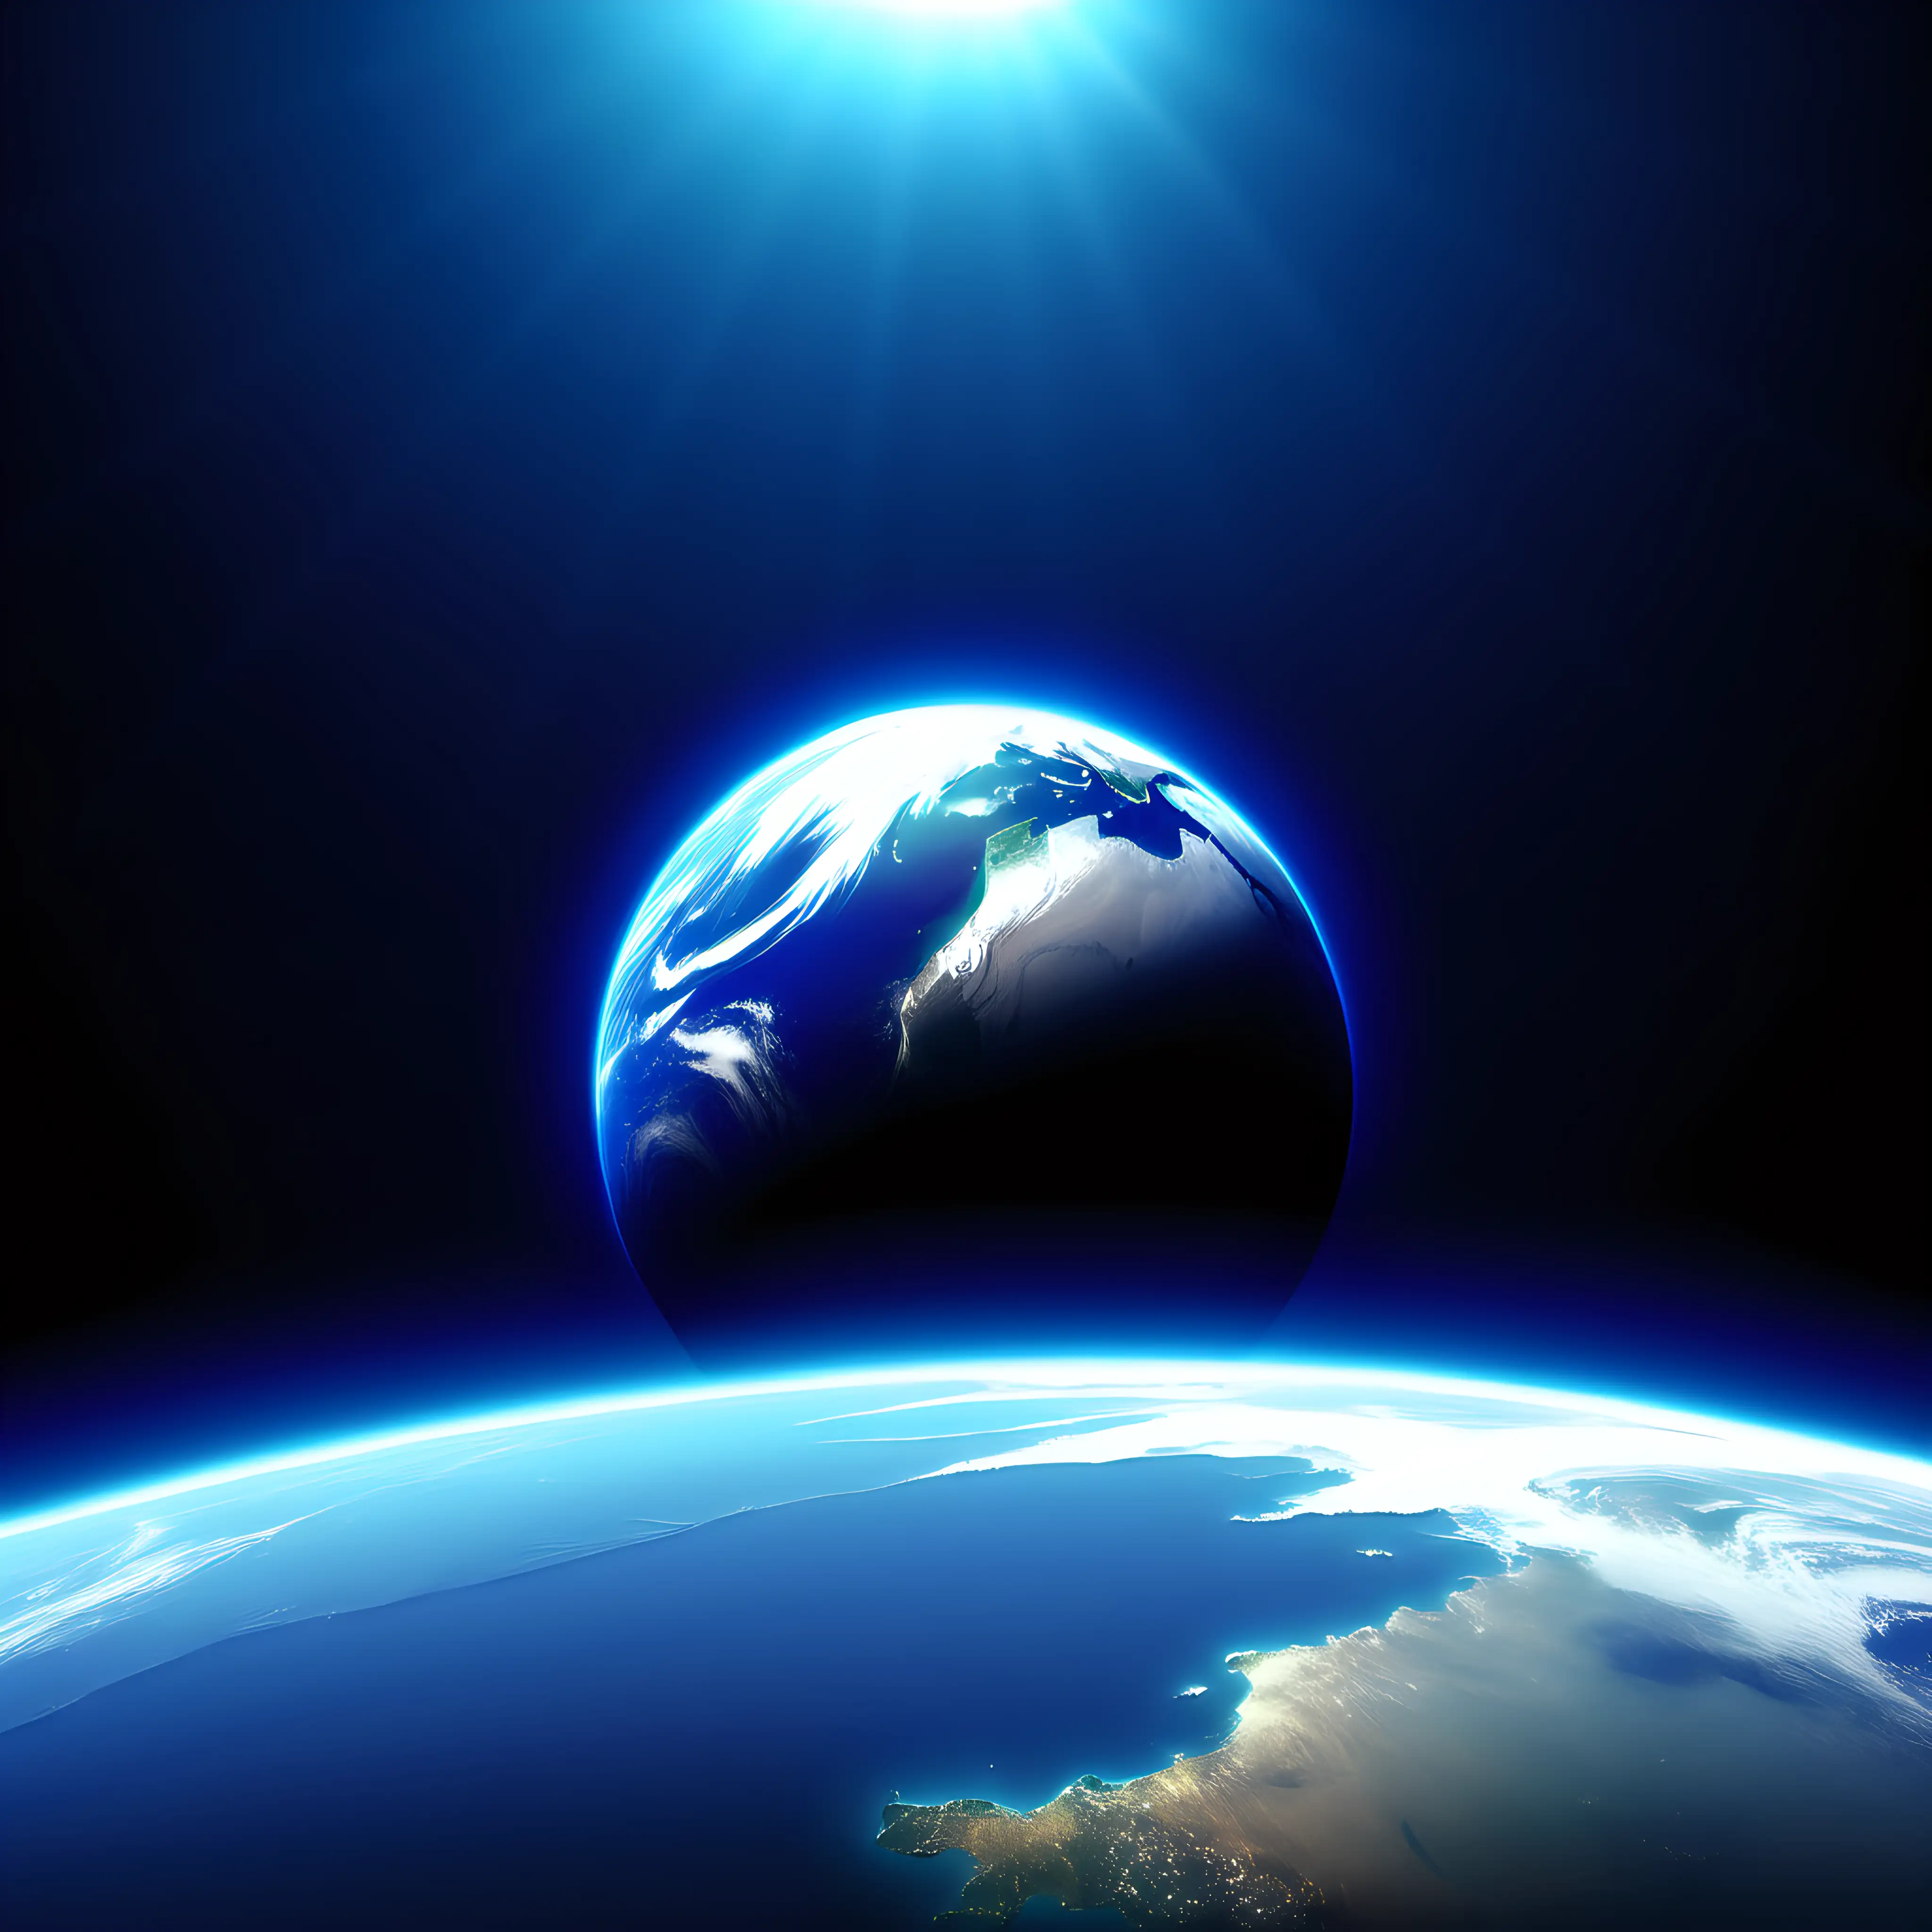 Beautiful image of earth like blue planet